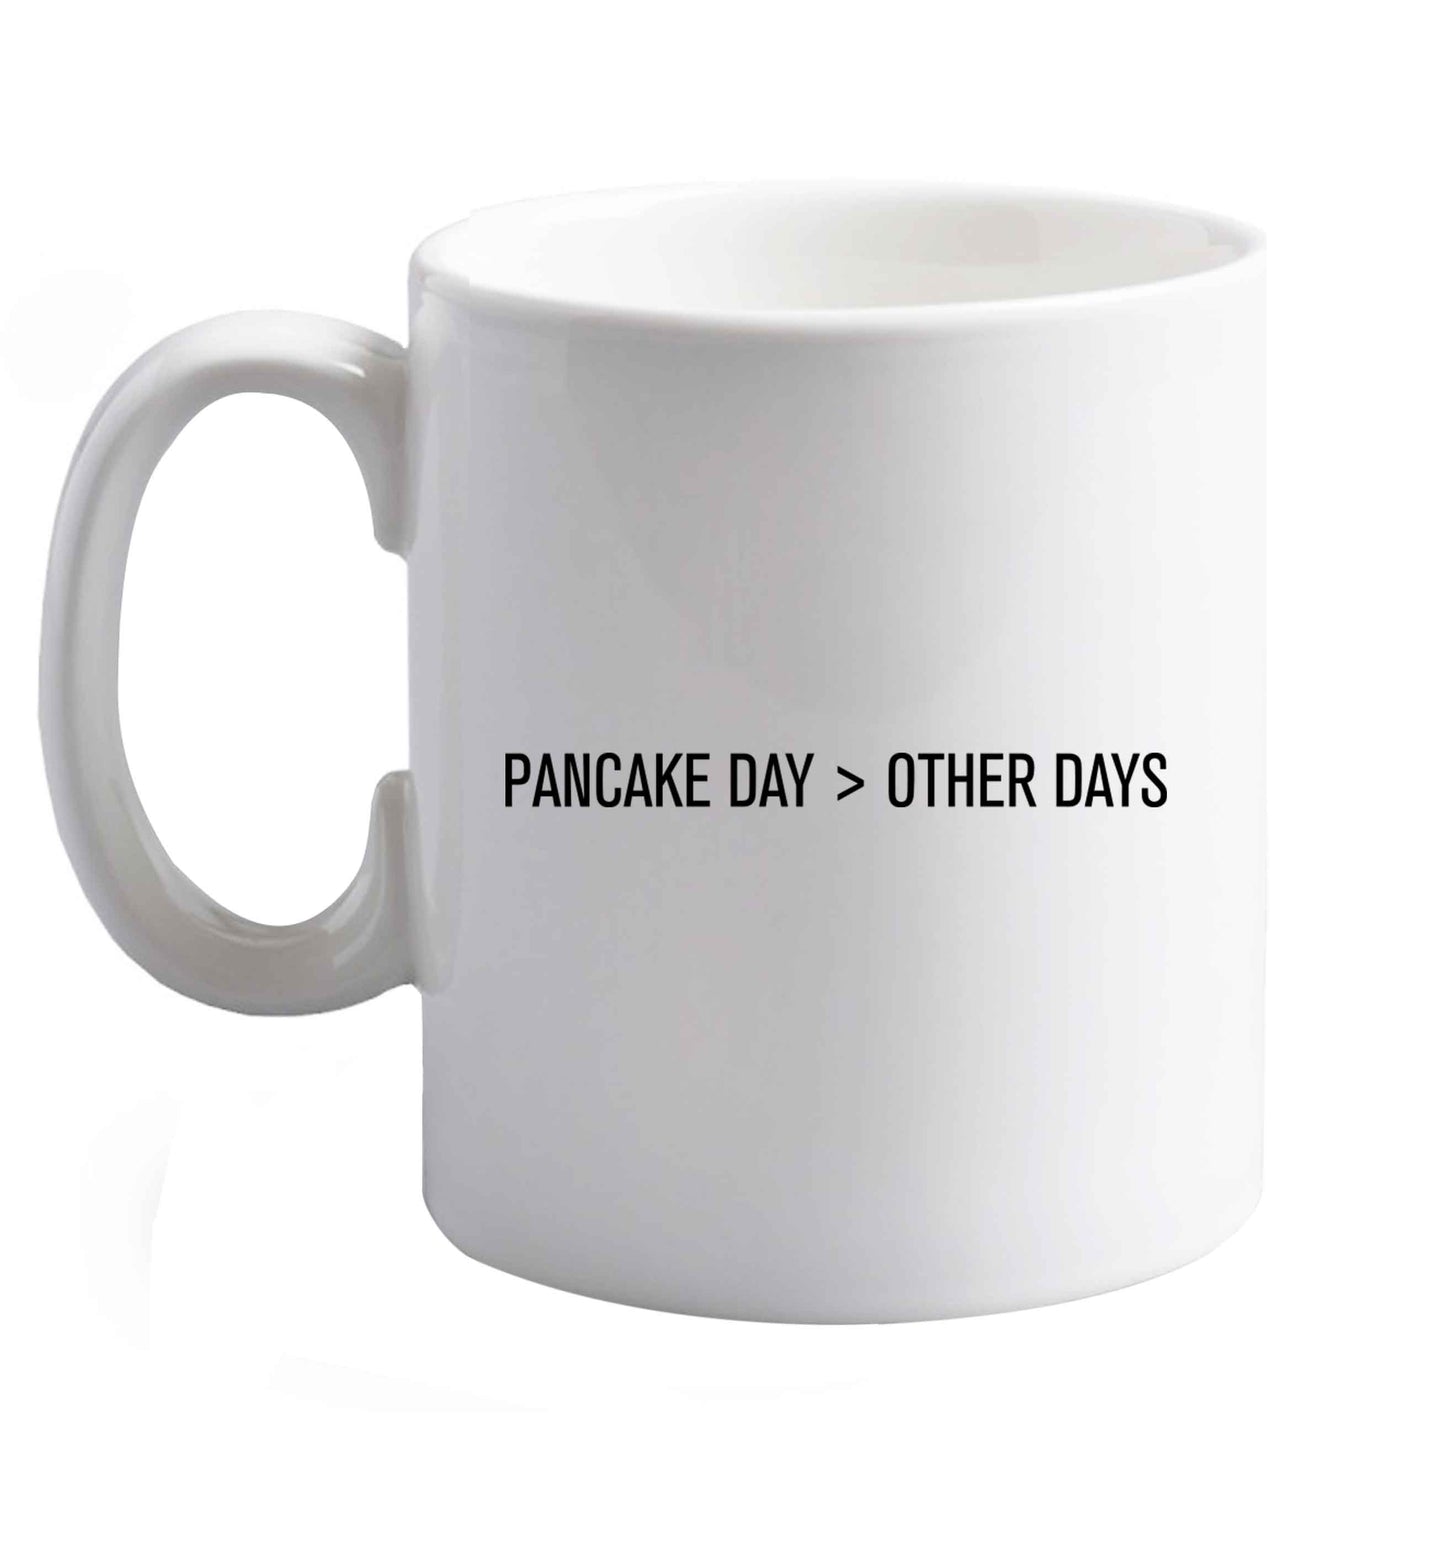 10 oz Pancake Day > Other Days ceramic mug right handed